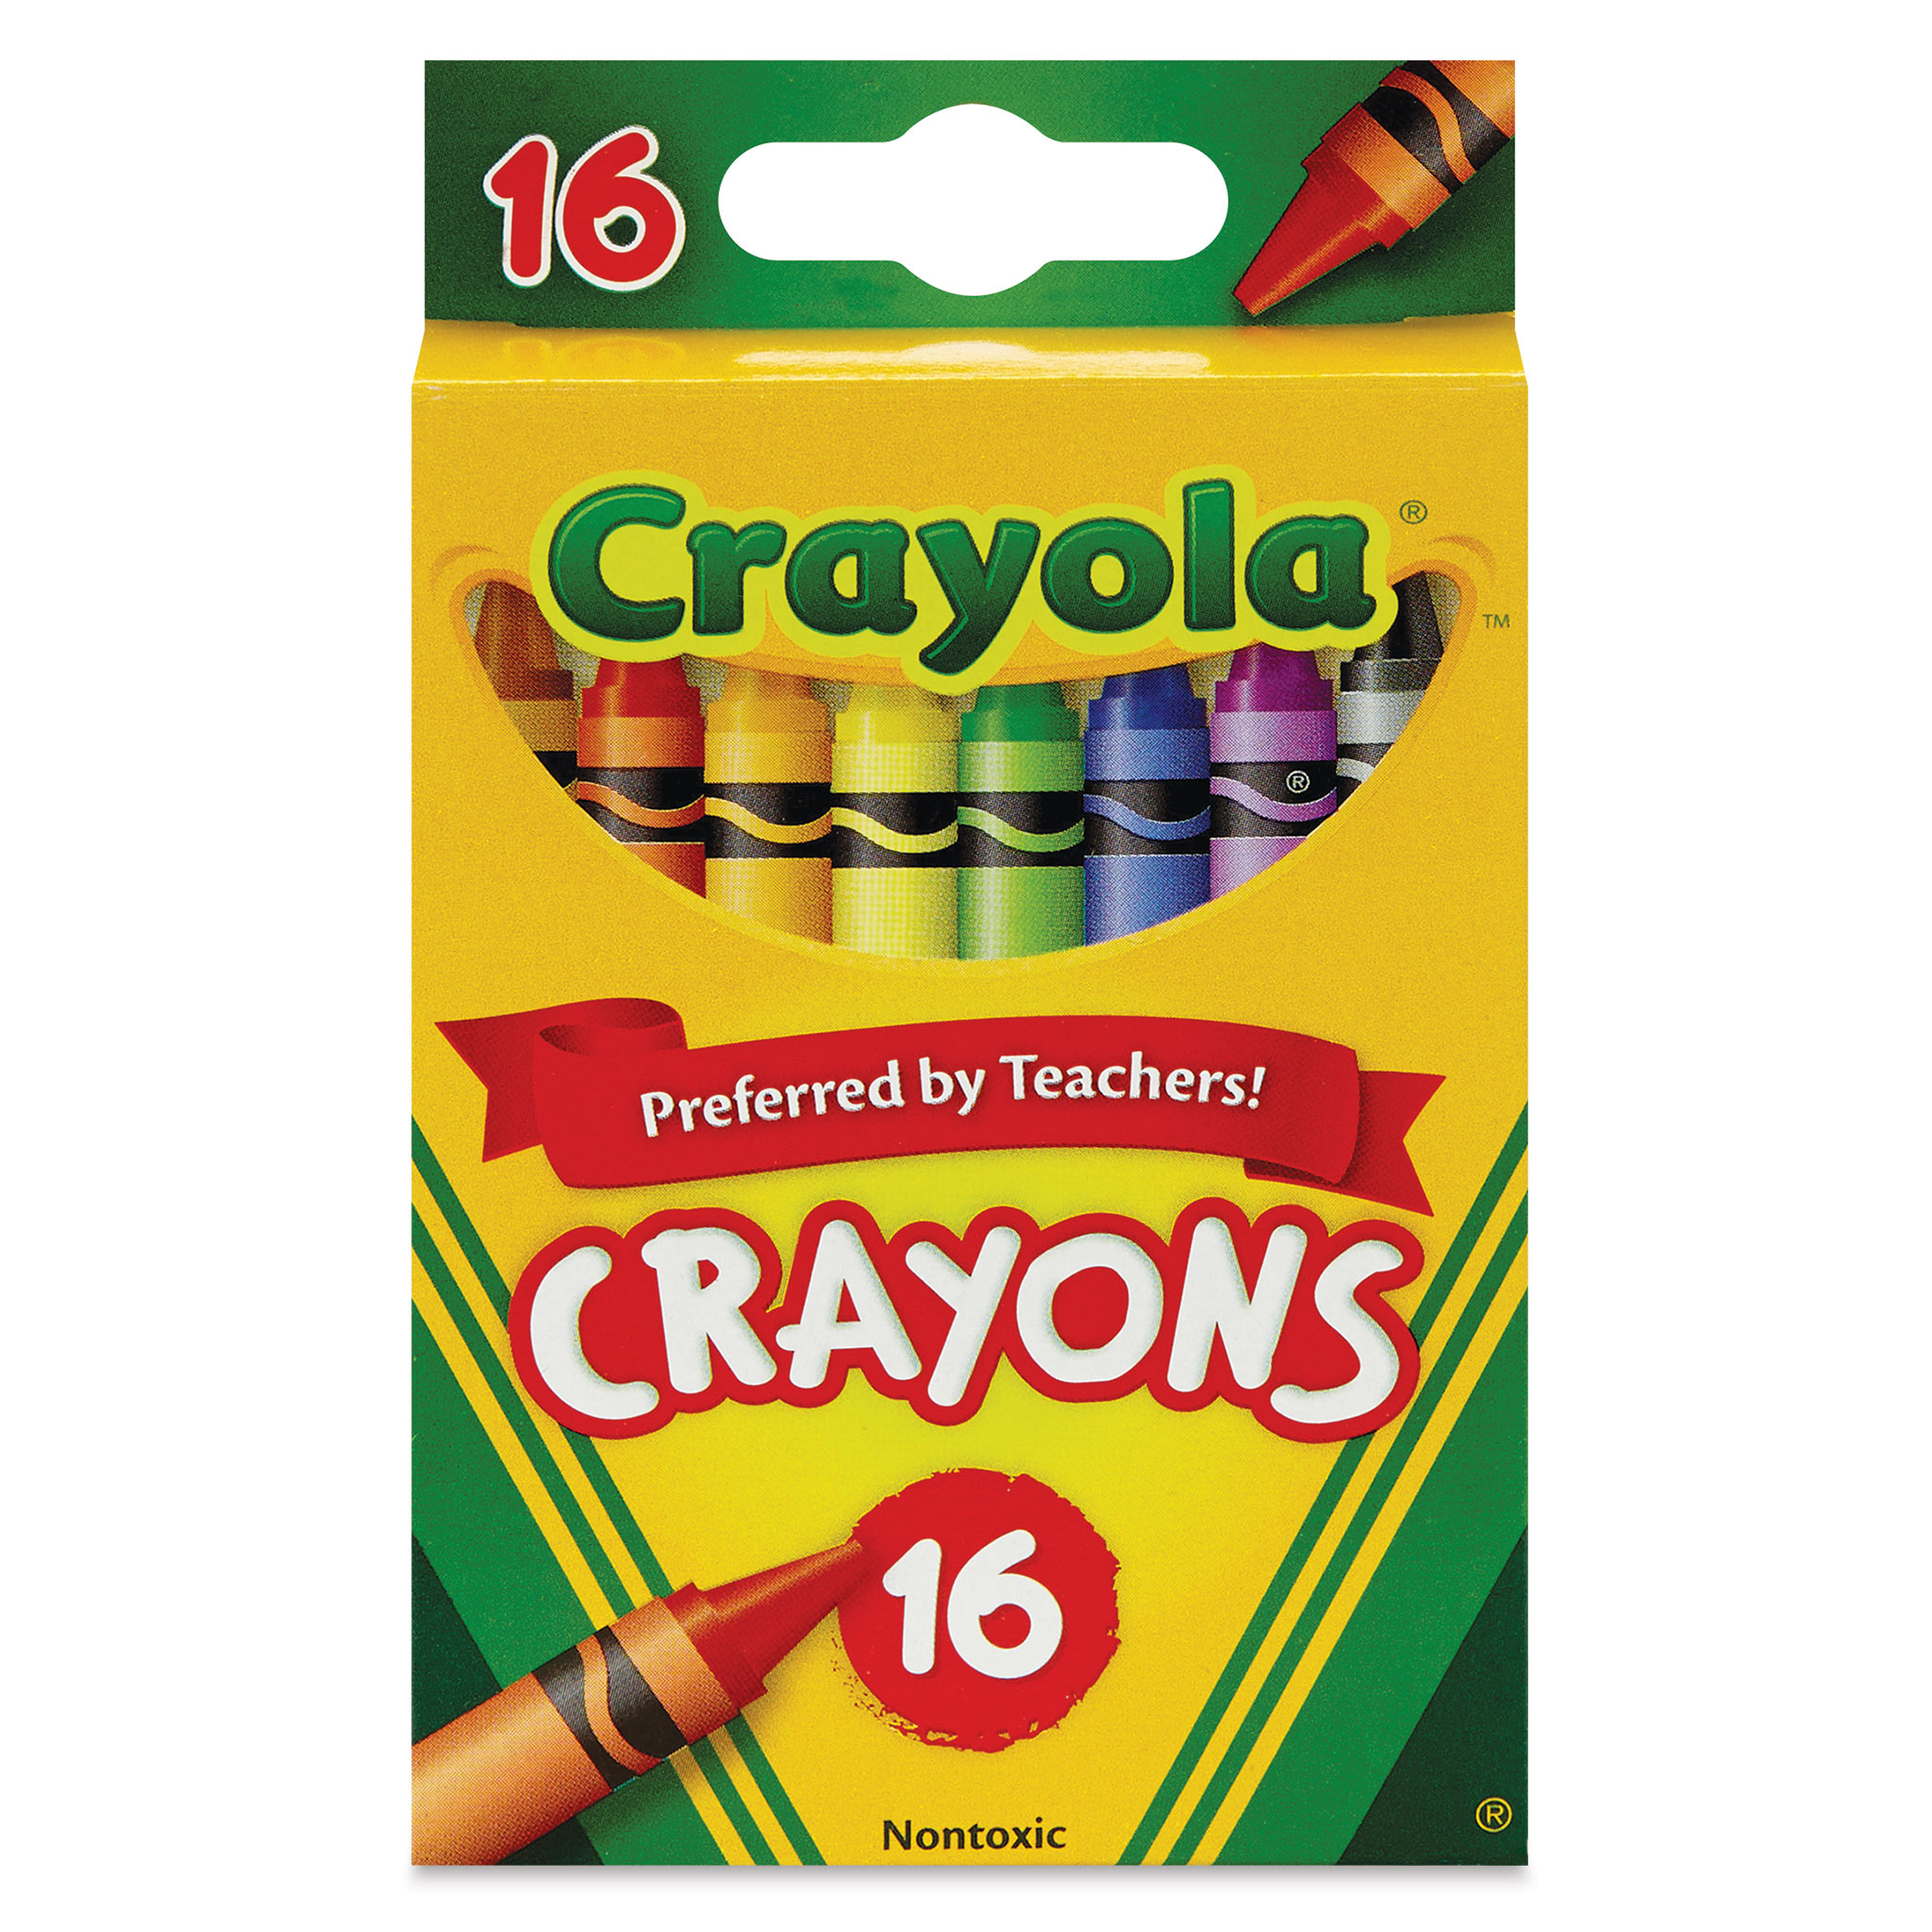 Crayola  BLICK Art Materials